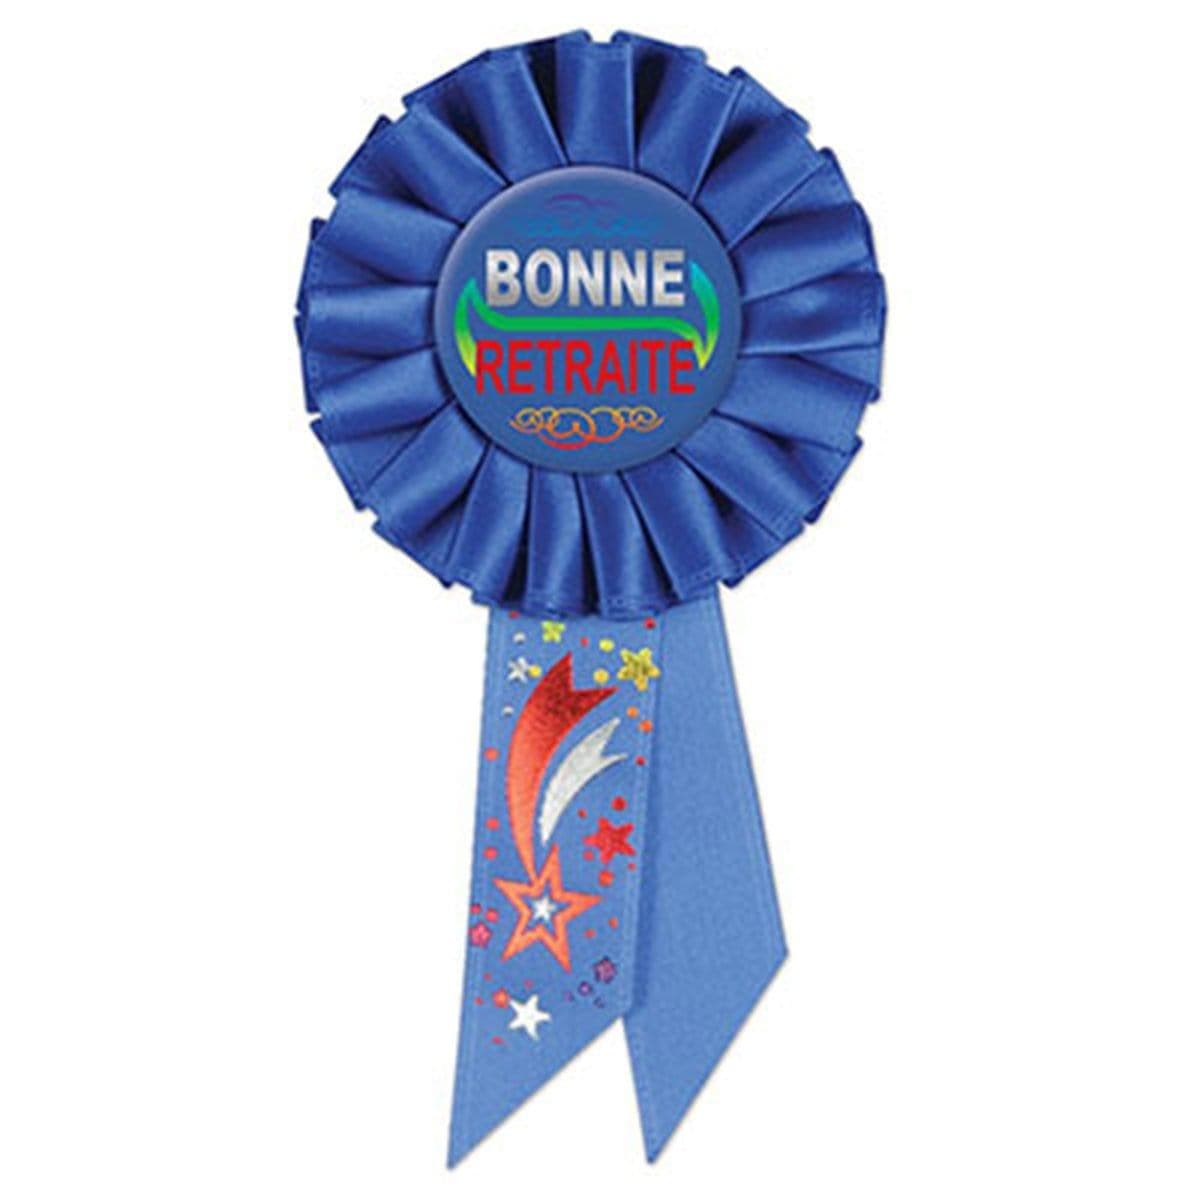 Buy Retirement Award Ribbon - Bonne Retraite sold at Party Expert